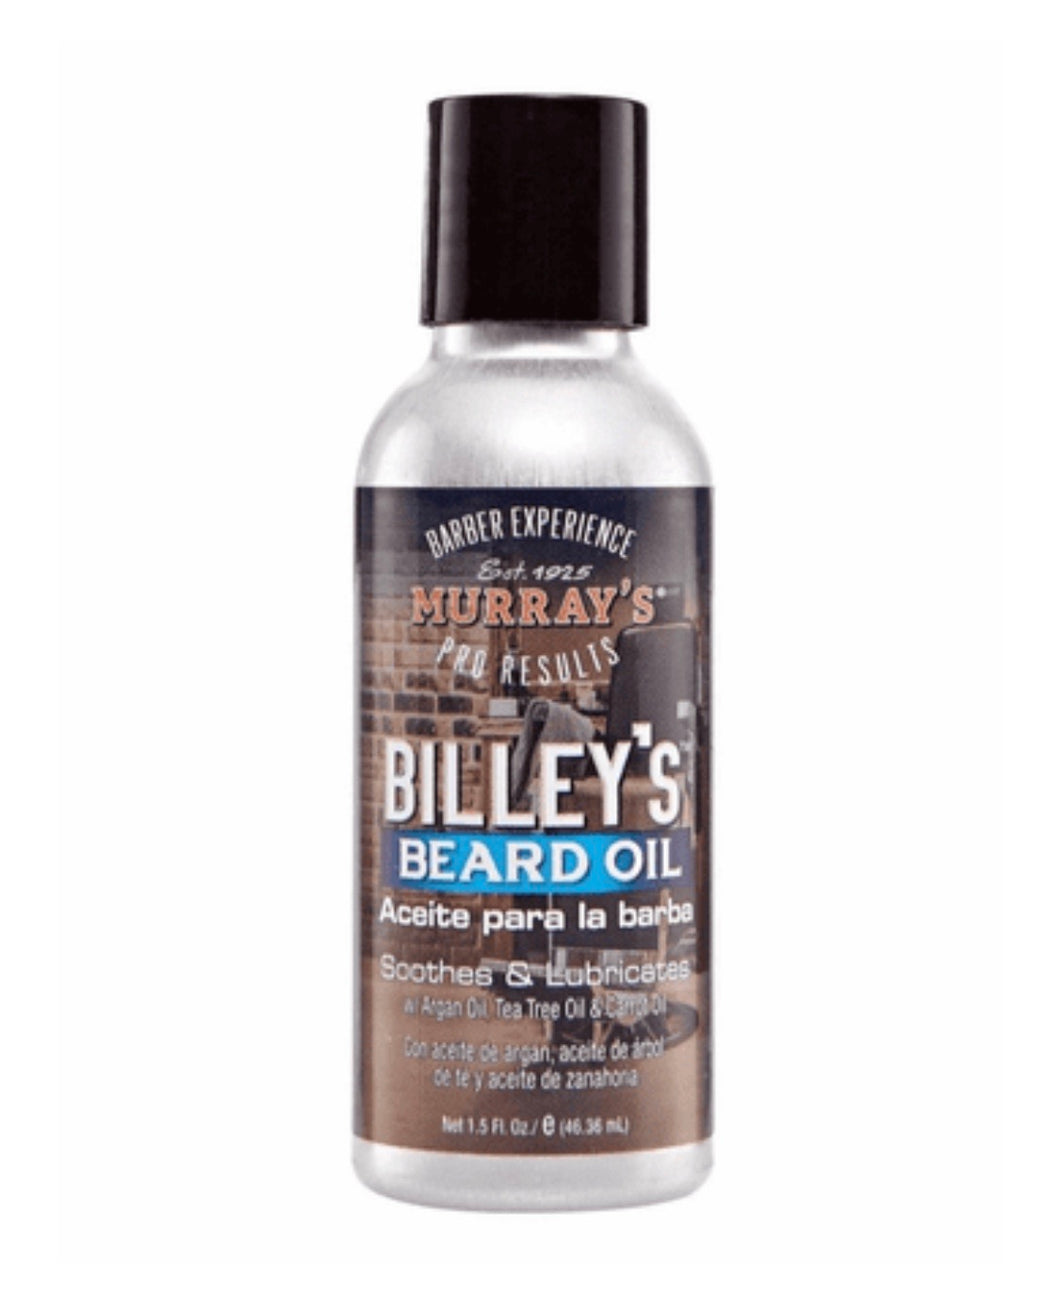 Murray’s Billey’s Beard Oil